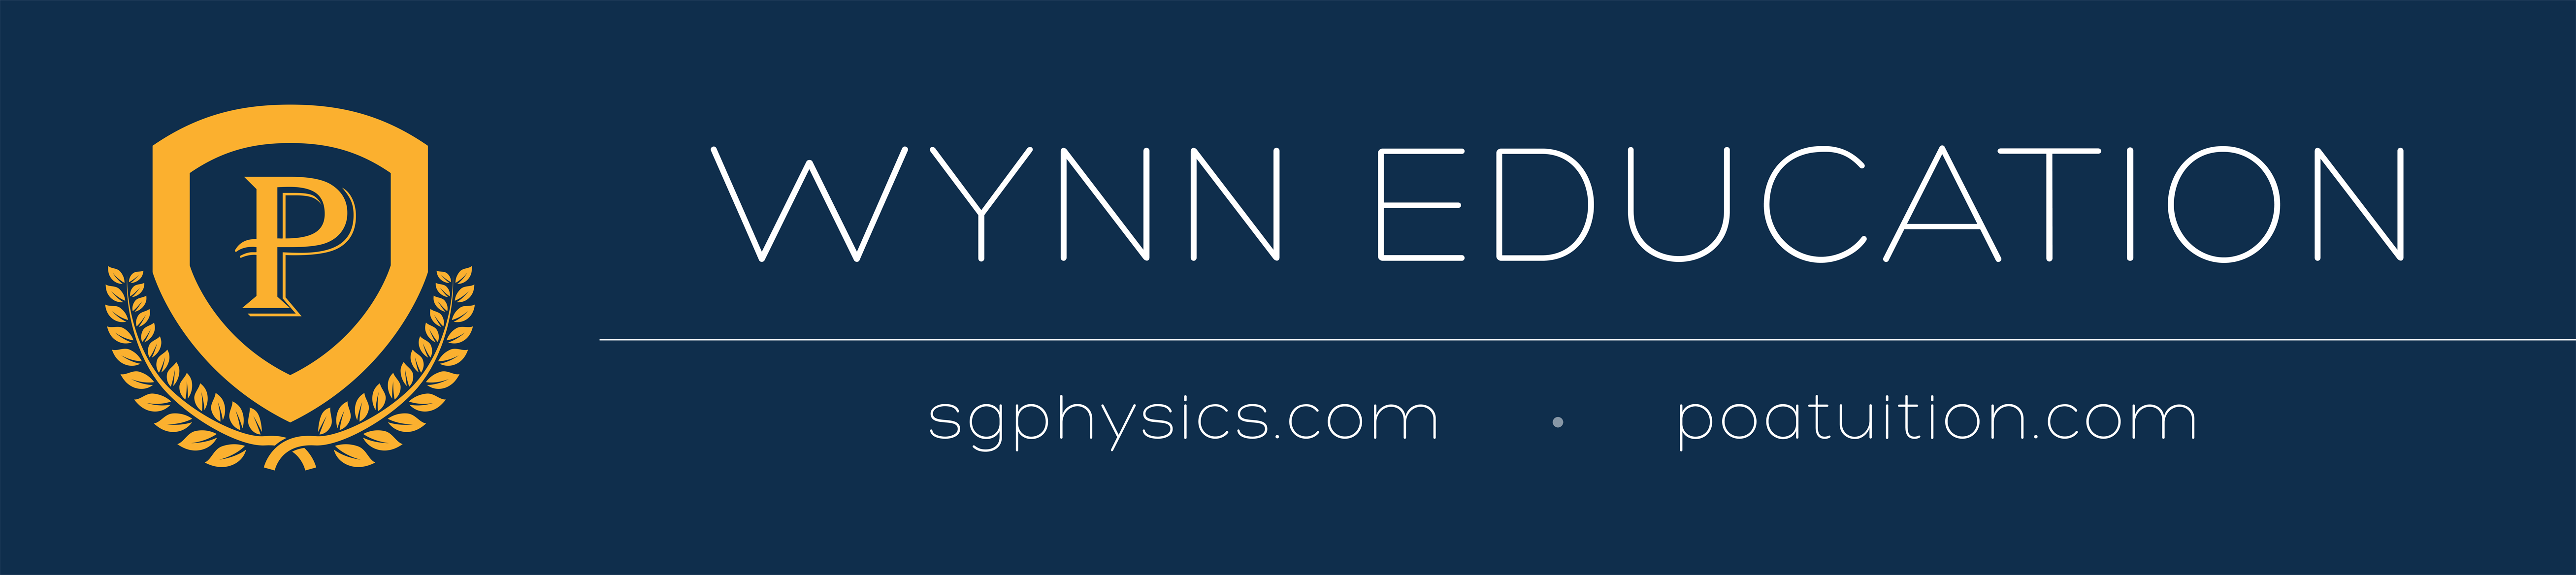 Wynn Education Centre Pte Ltd cover